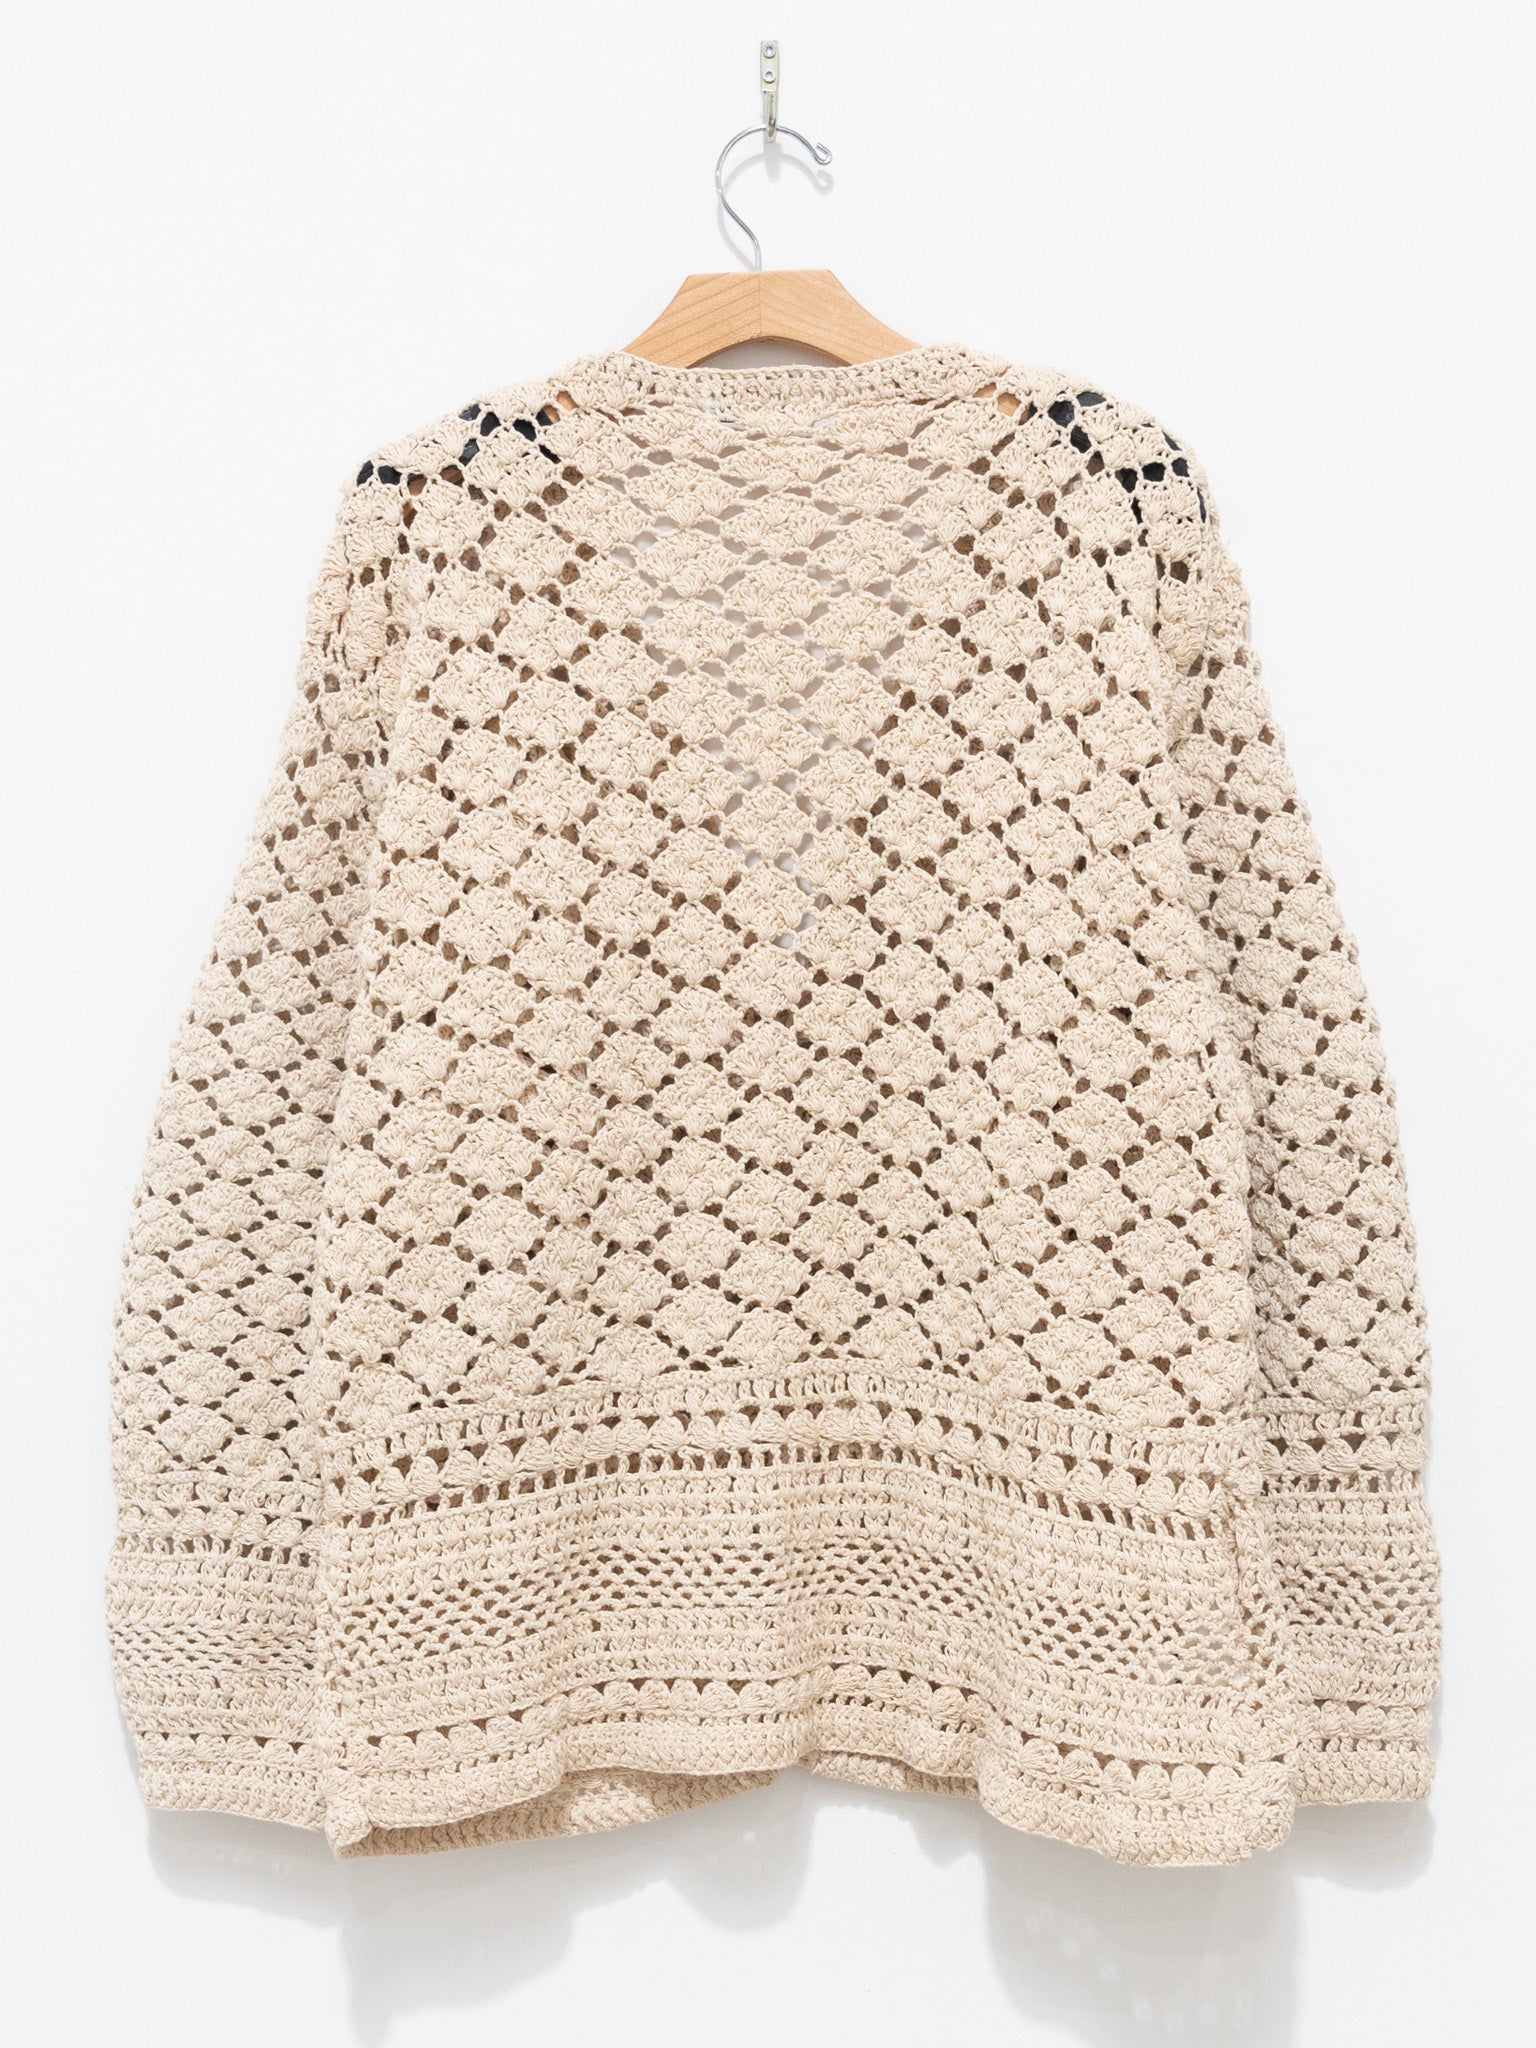 Namu Shop - Niche MacMahon Knitting Mills Crochet Cardigan - Natural